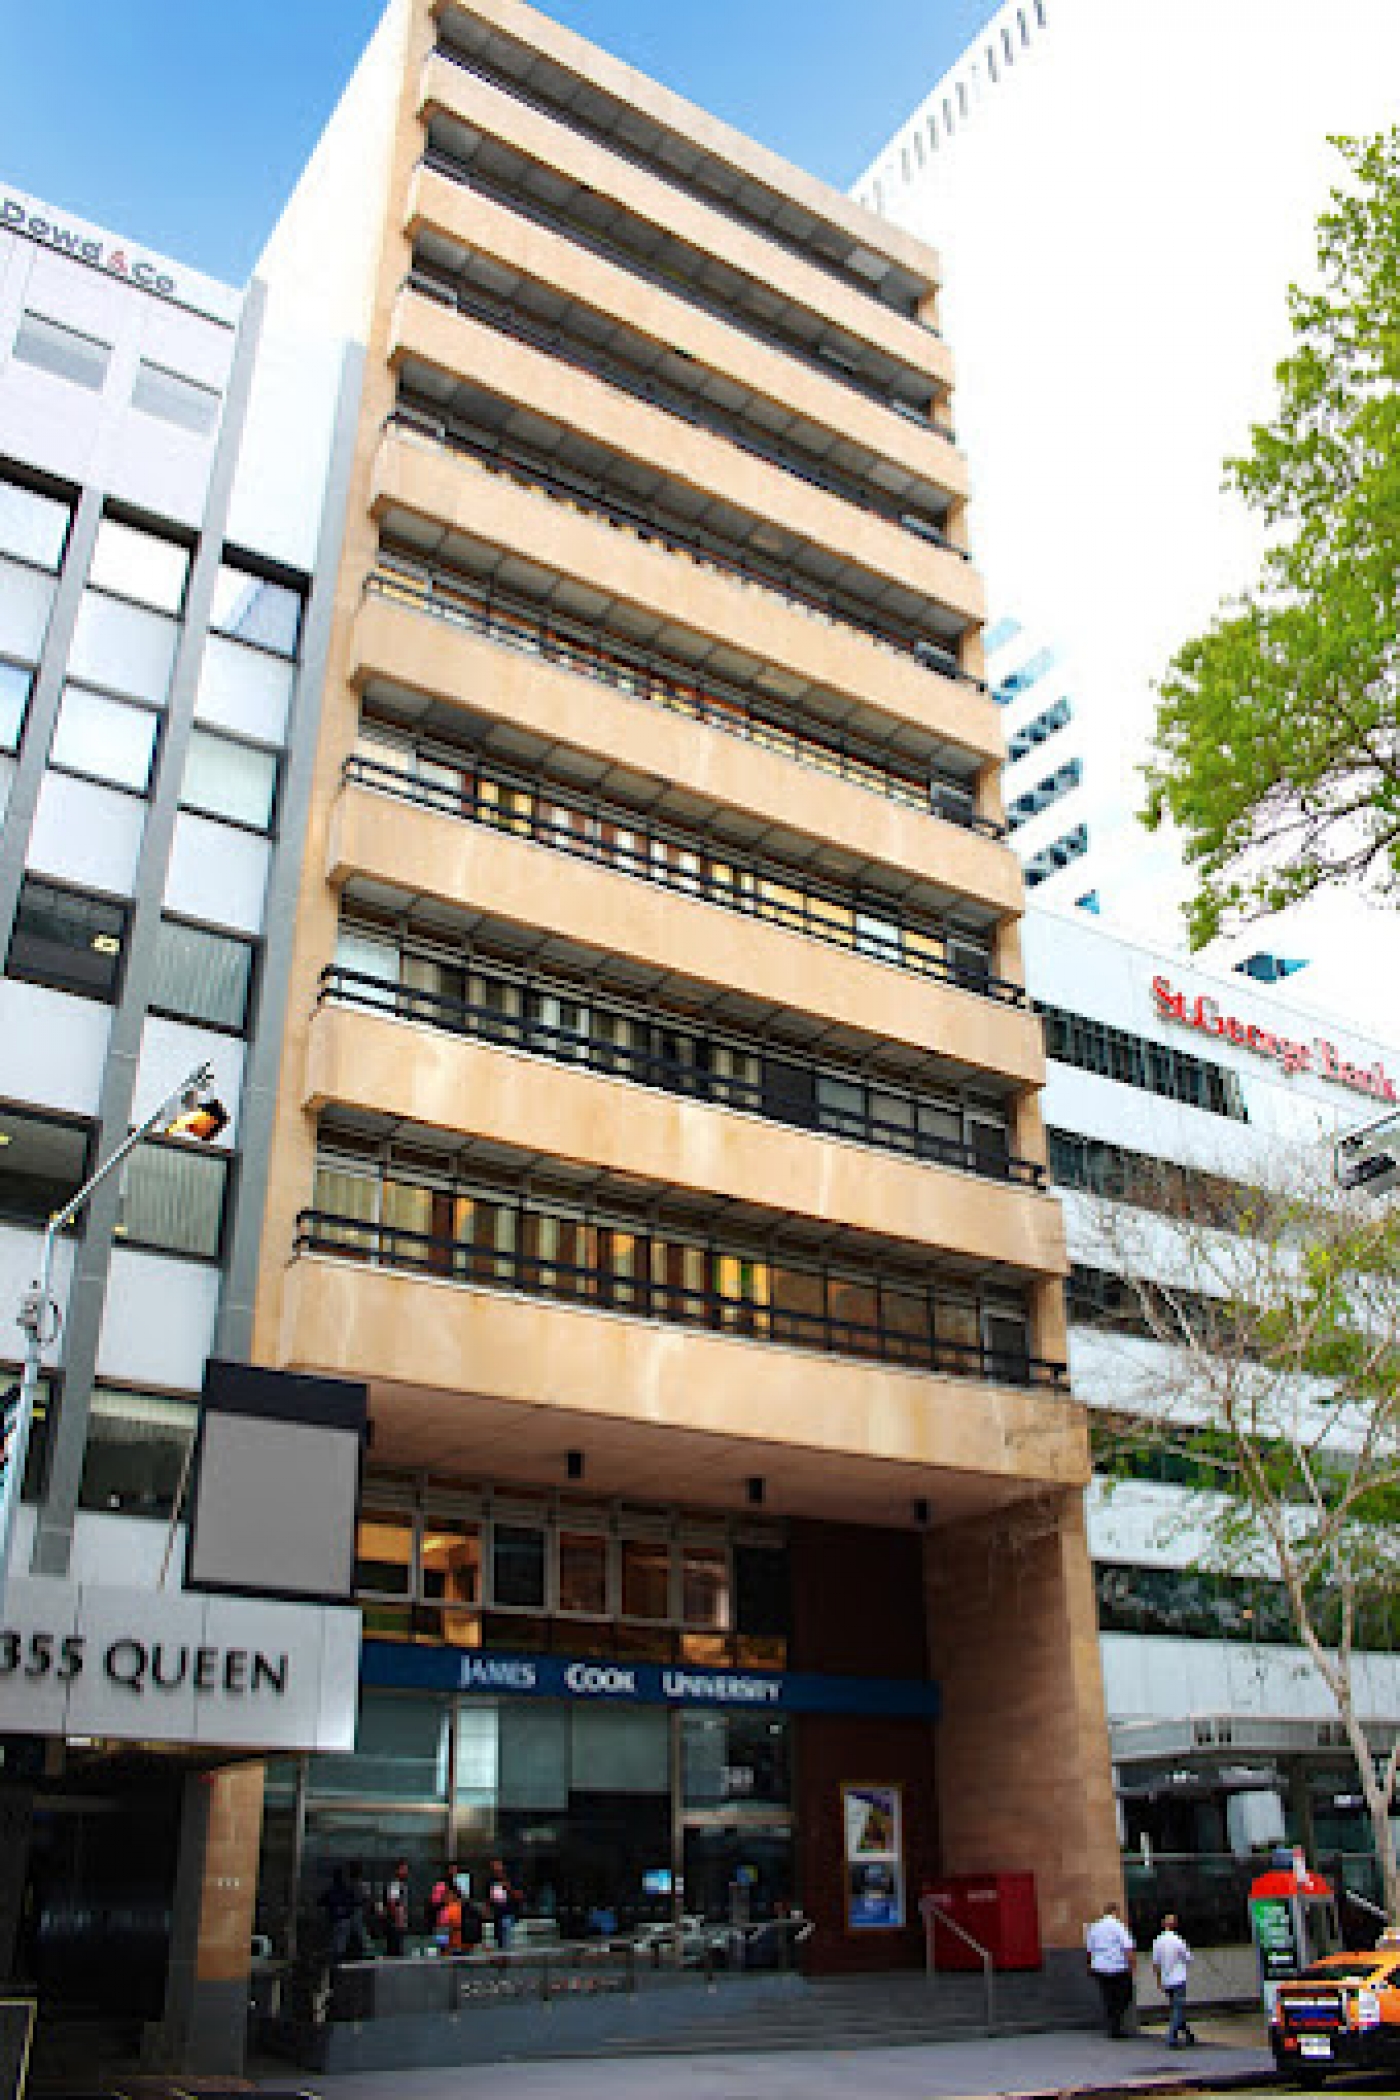 James Cook University - Brisbane Campus